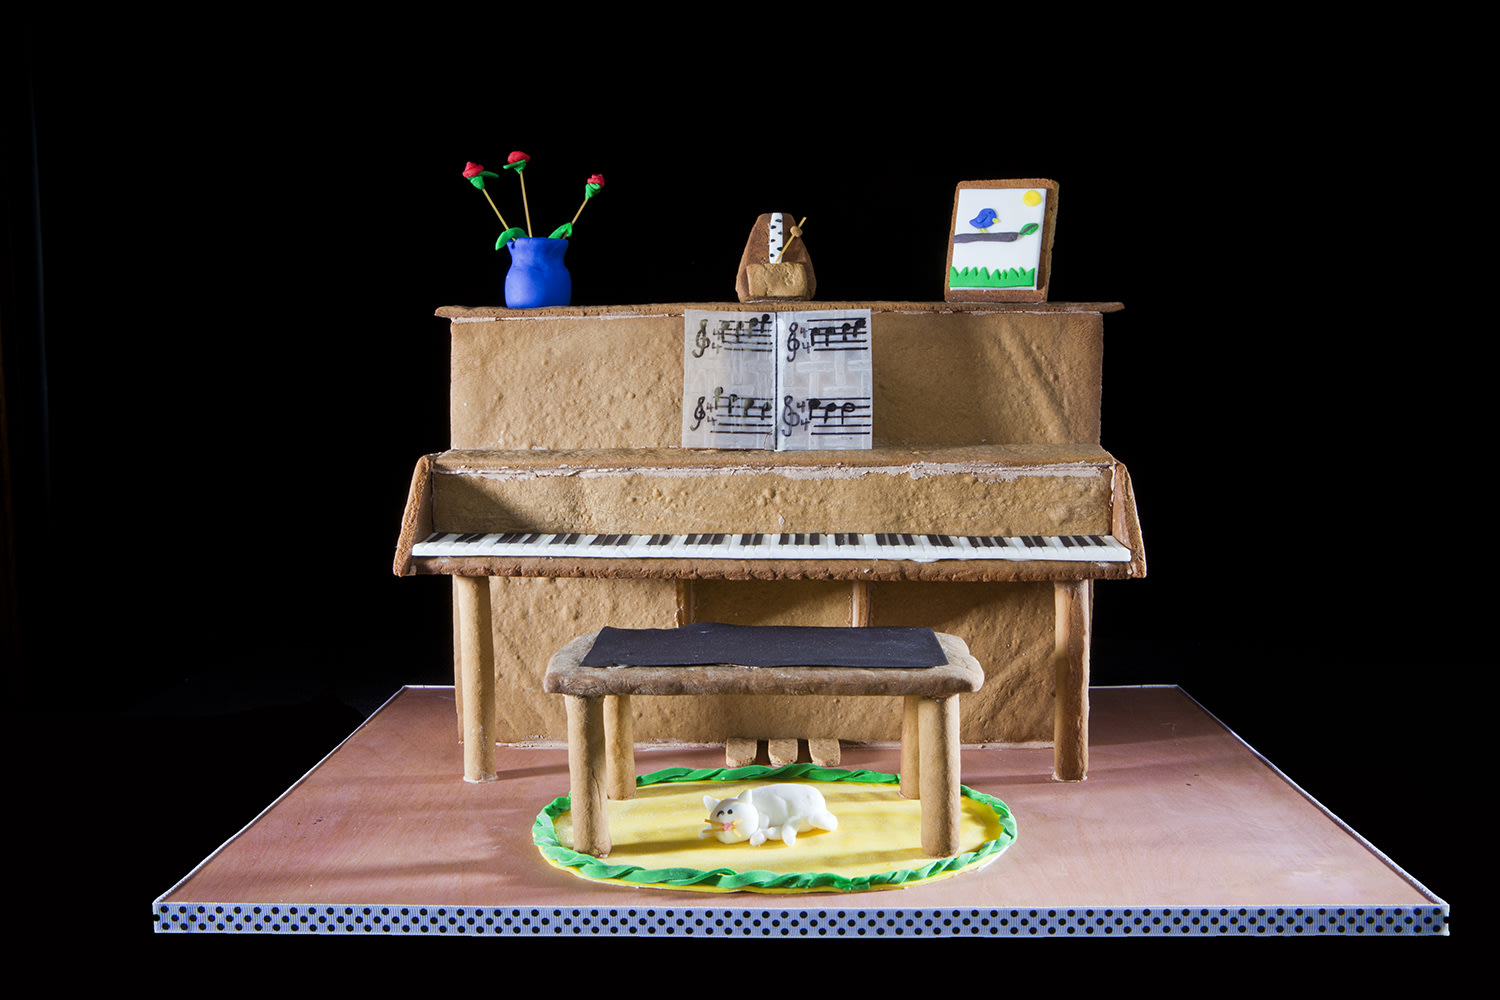 Piano cake | Music themed cakes, Piano cakes, Music note cake